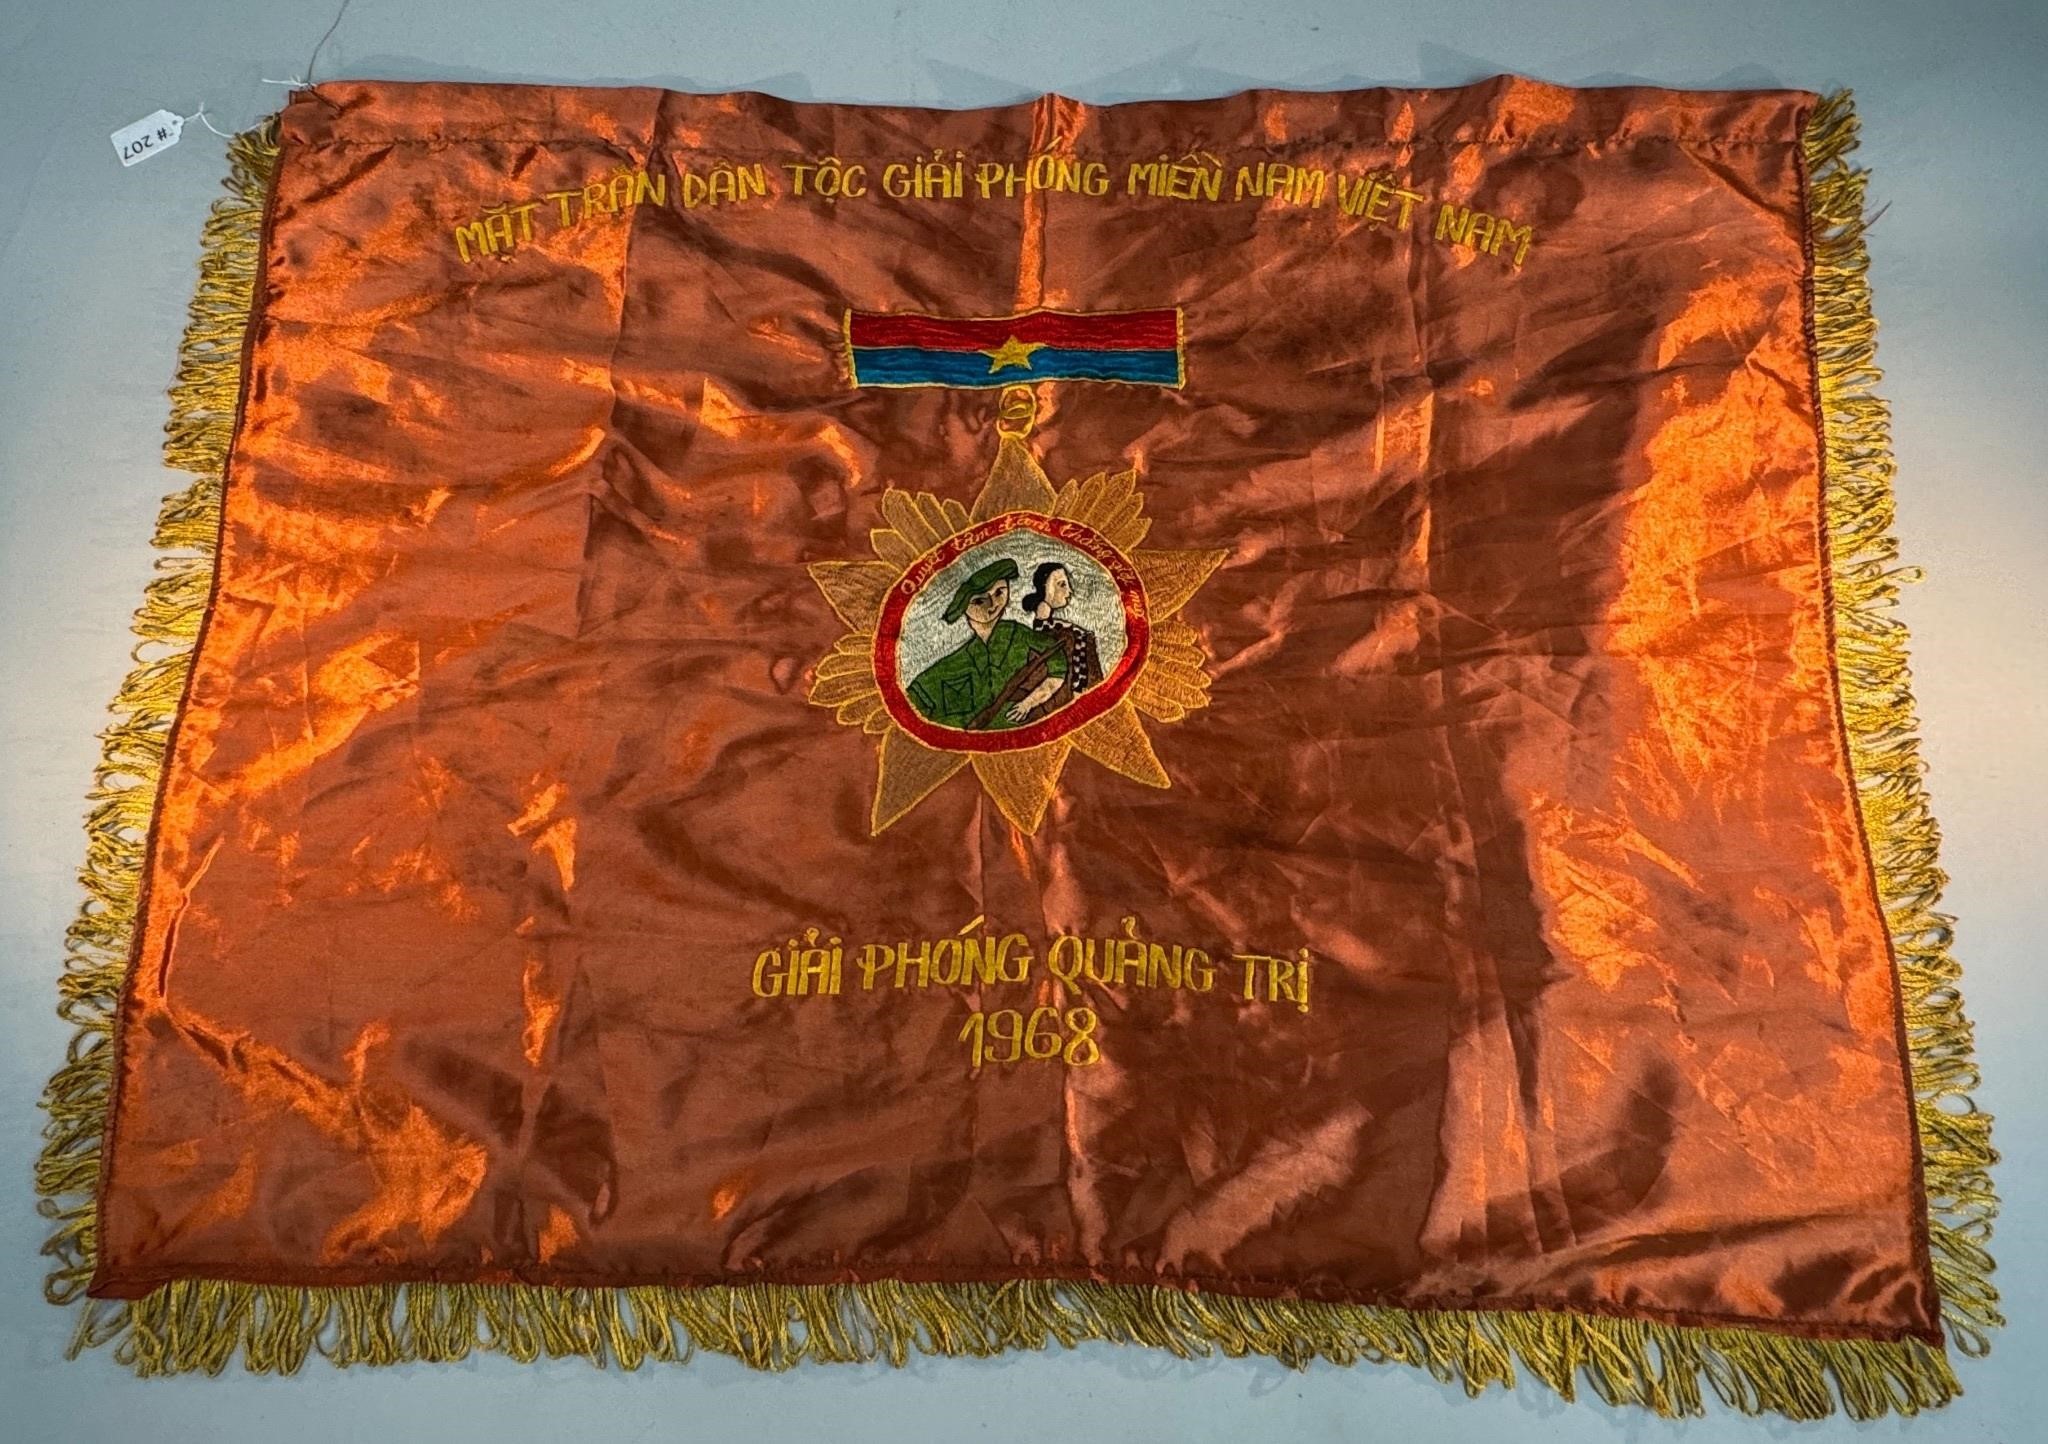 Viet Nam Era Viet Cong VC 1968 Divisional Flag